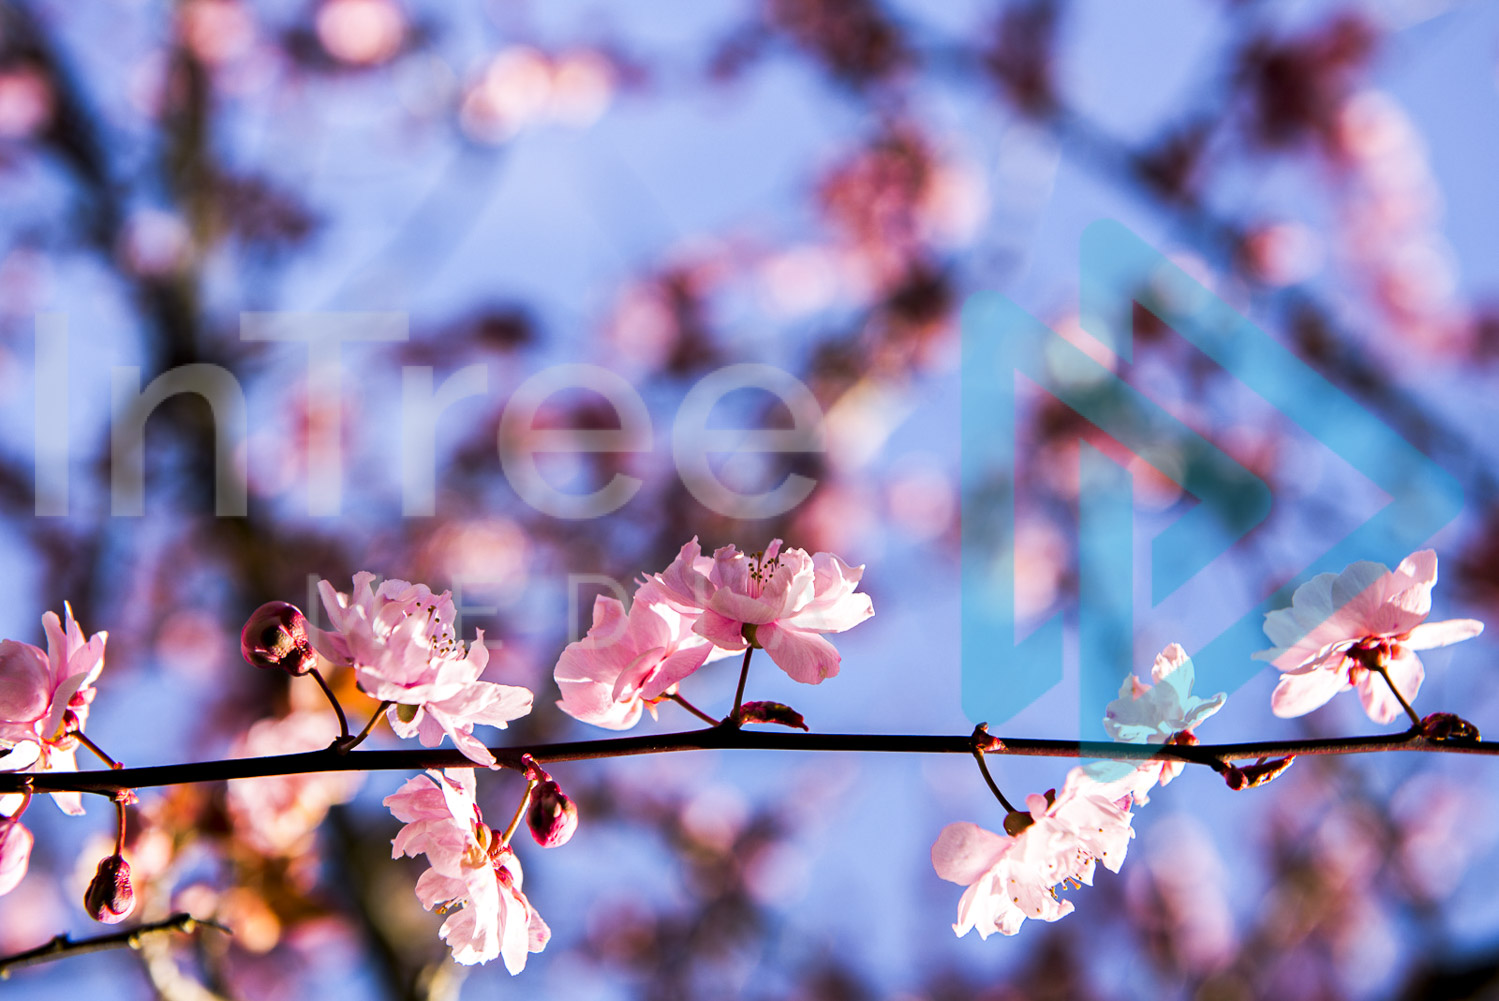 Vibrant pink cherry blossom with blue sky InTree arborist image 001-21-0000